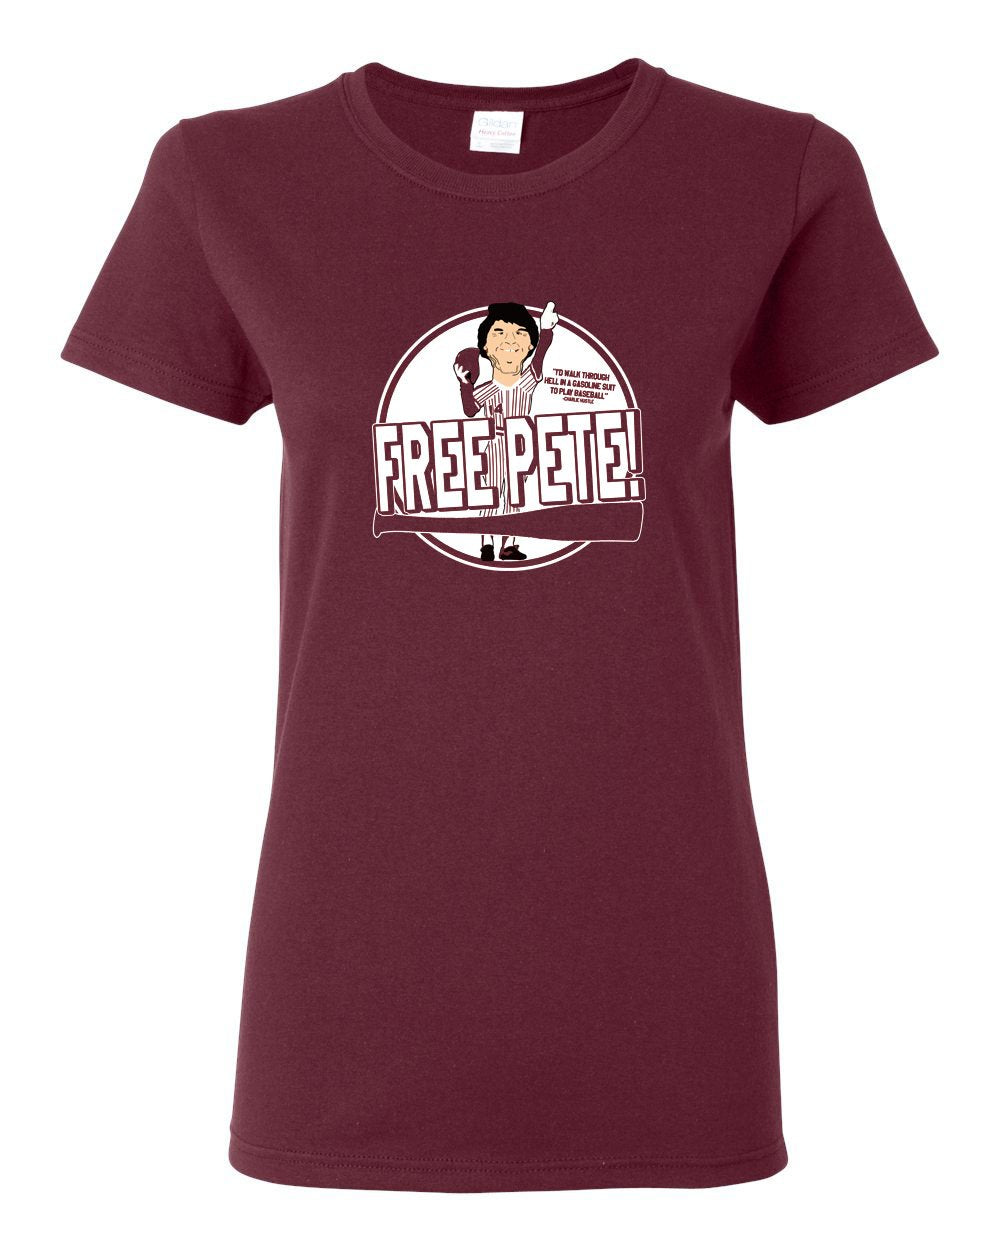 Free Pete LADIES Missy-Fit T-Shirt